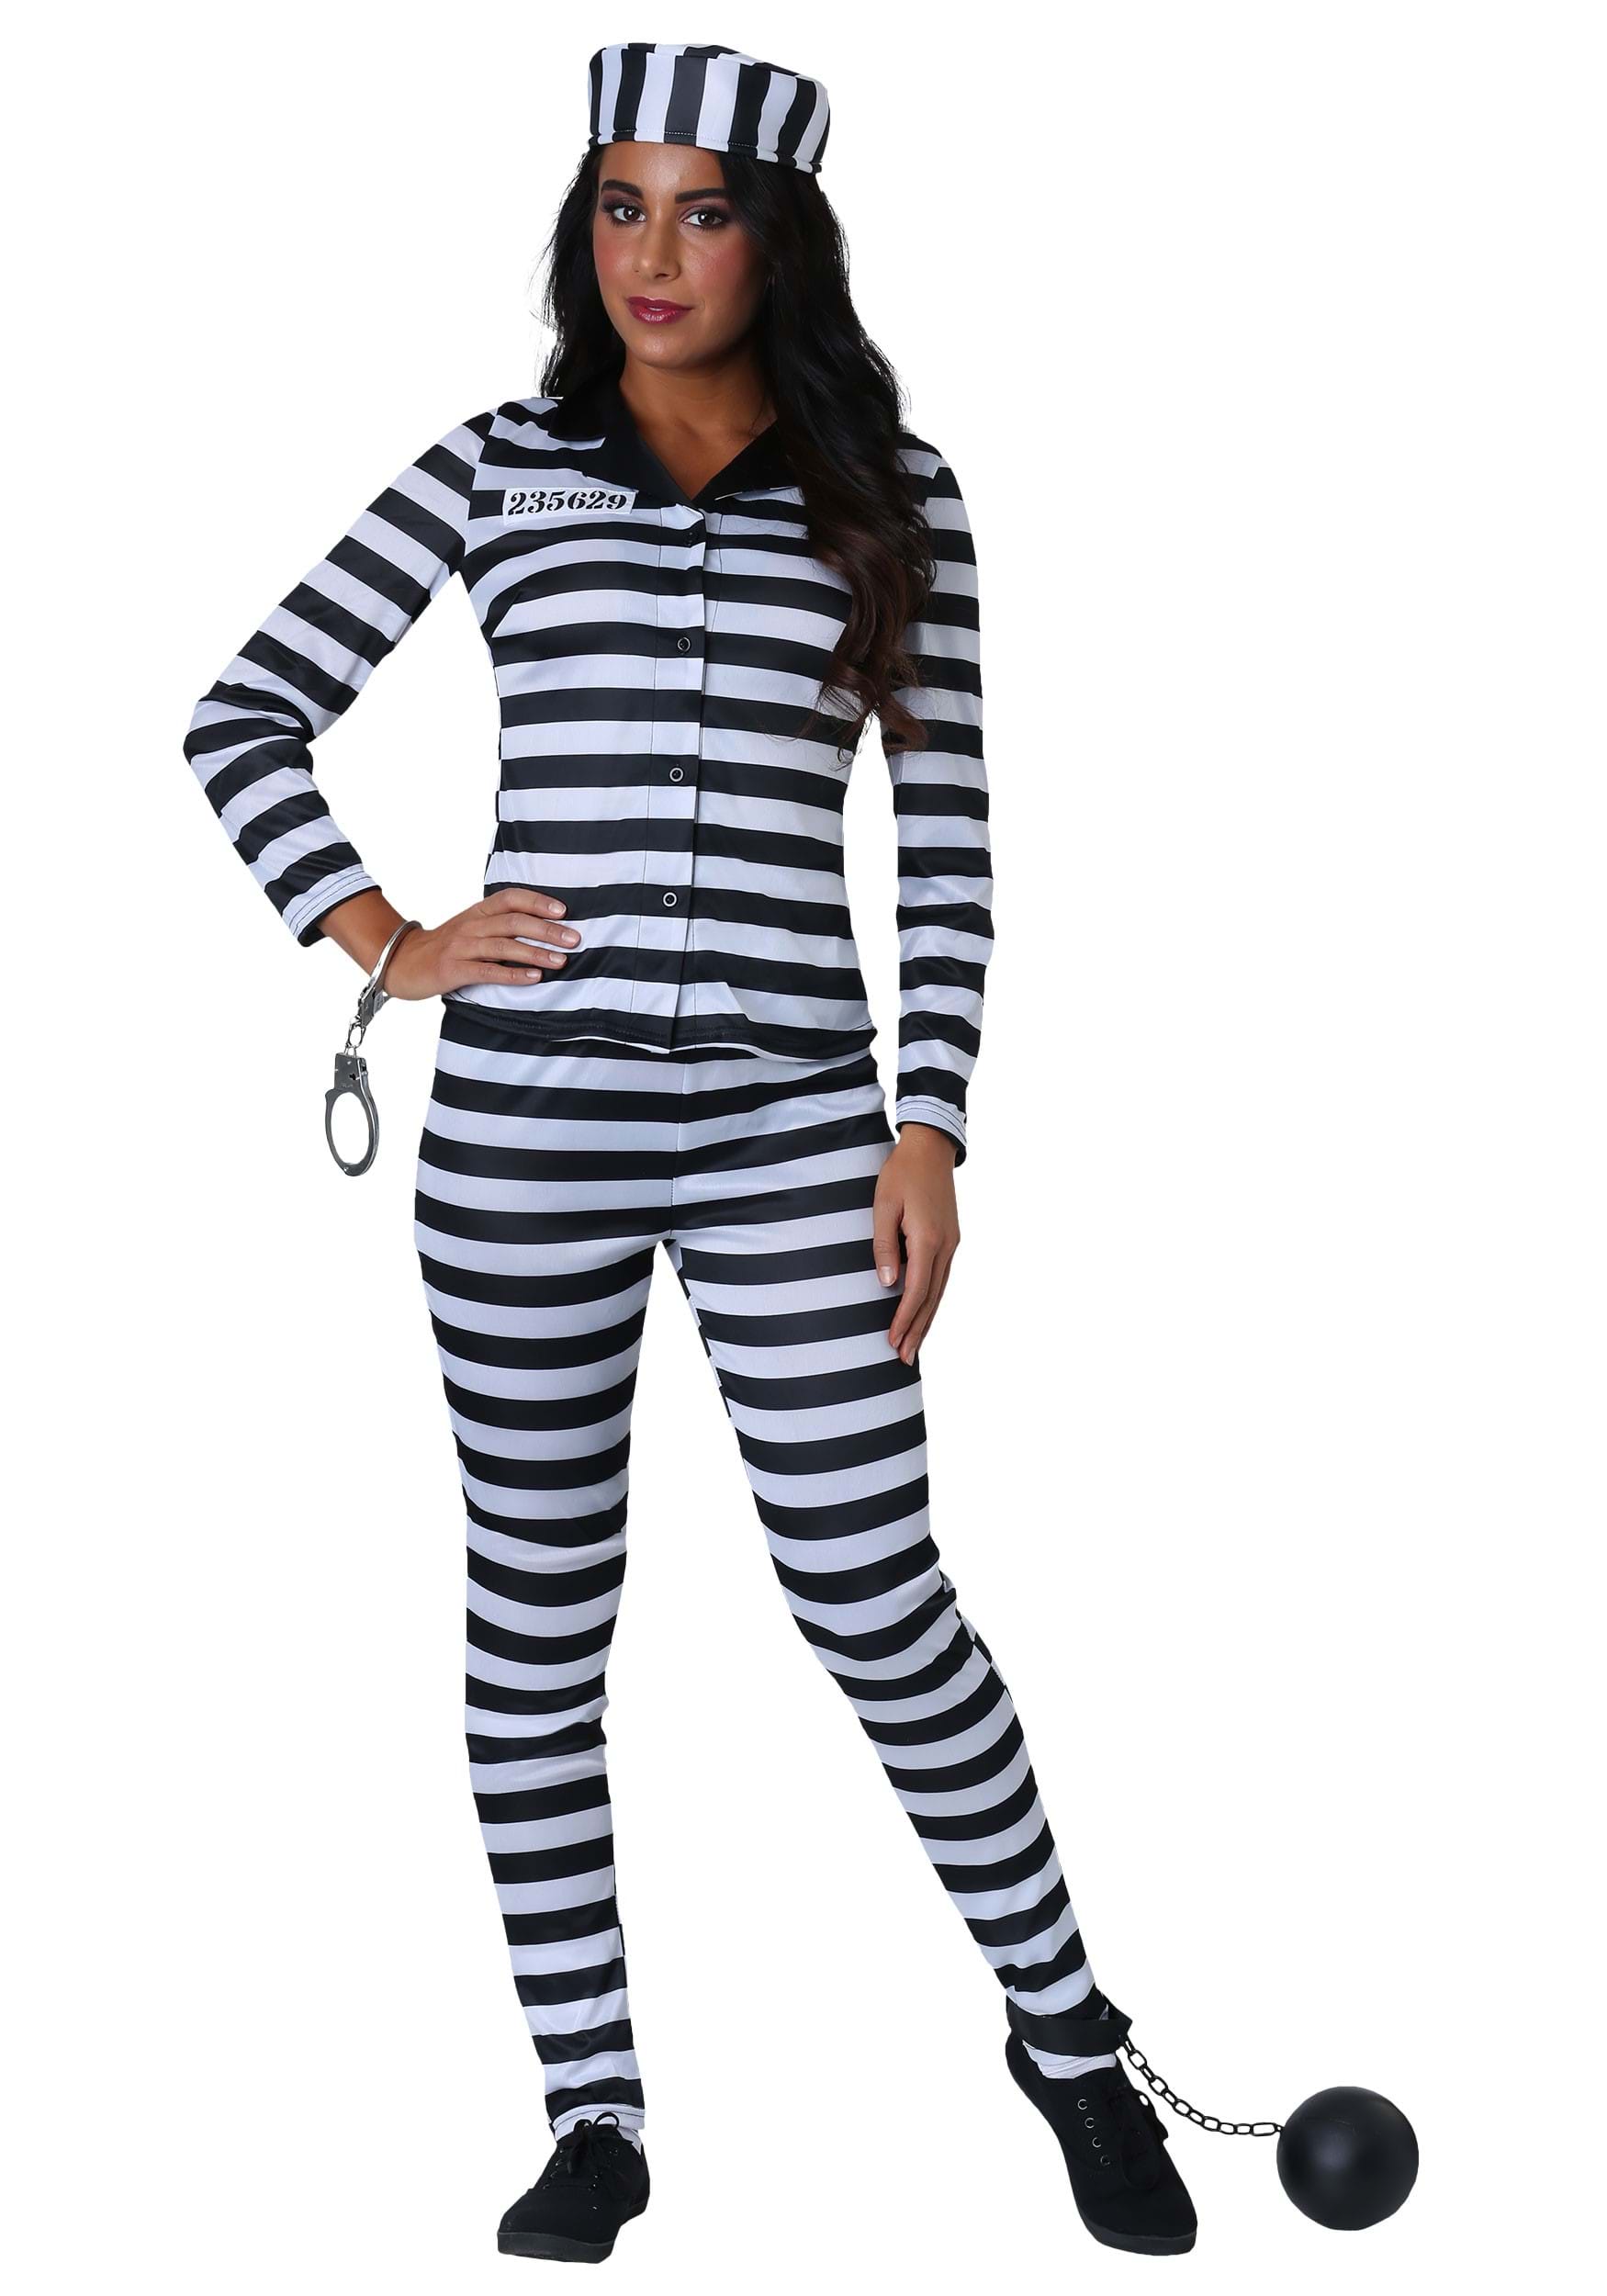 Women’s Plus Size Incarcerated Cutie Costume